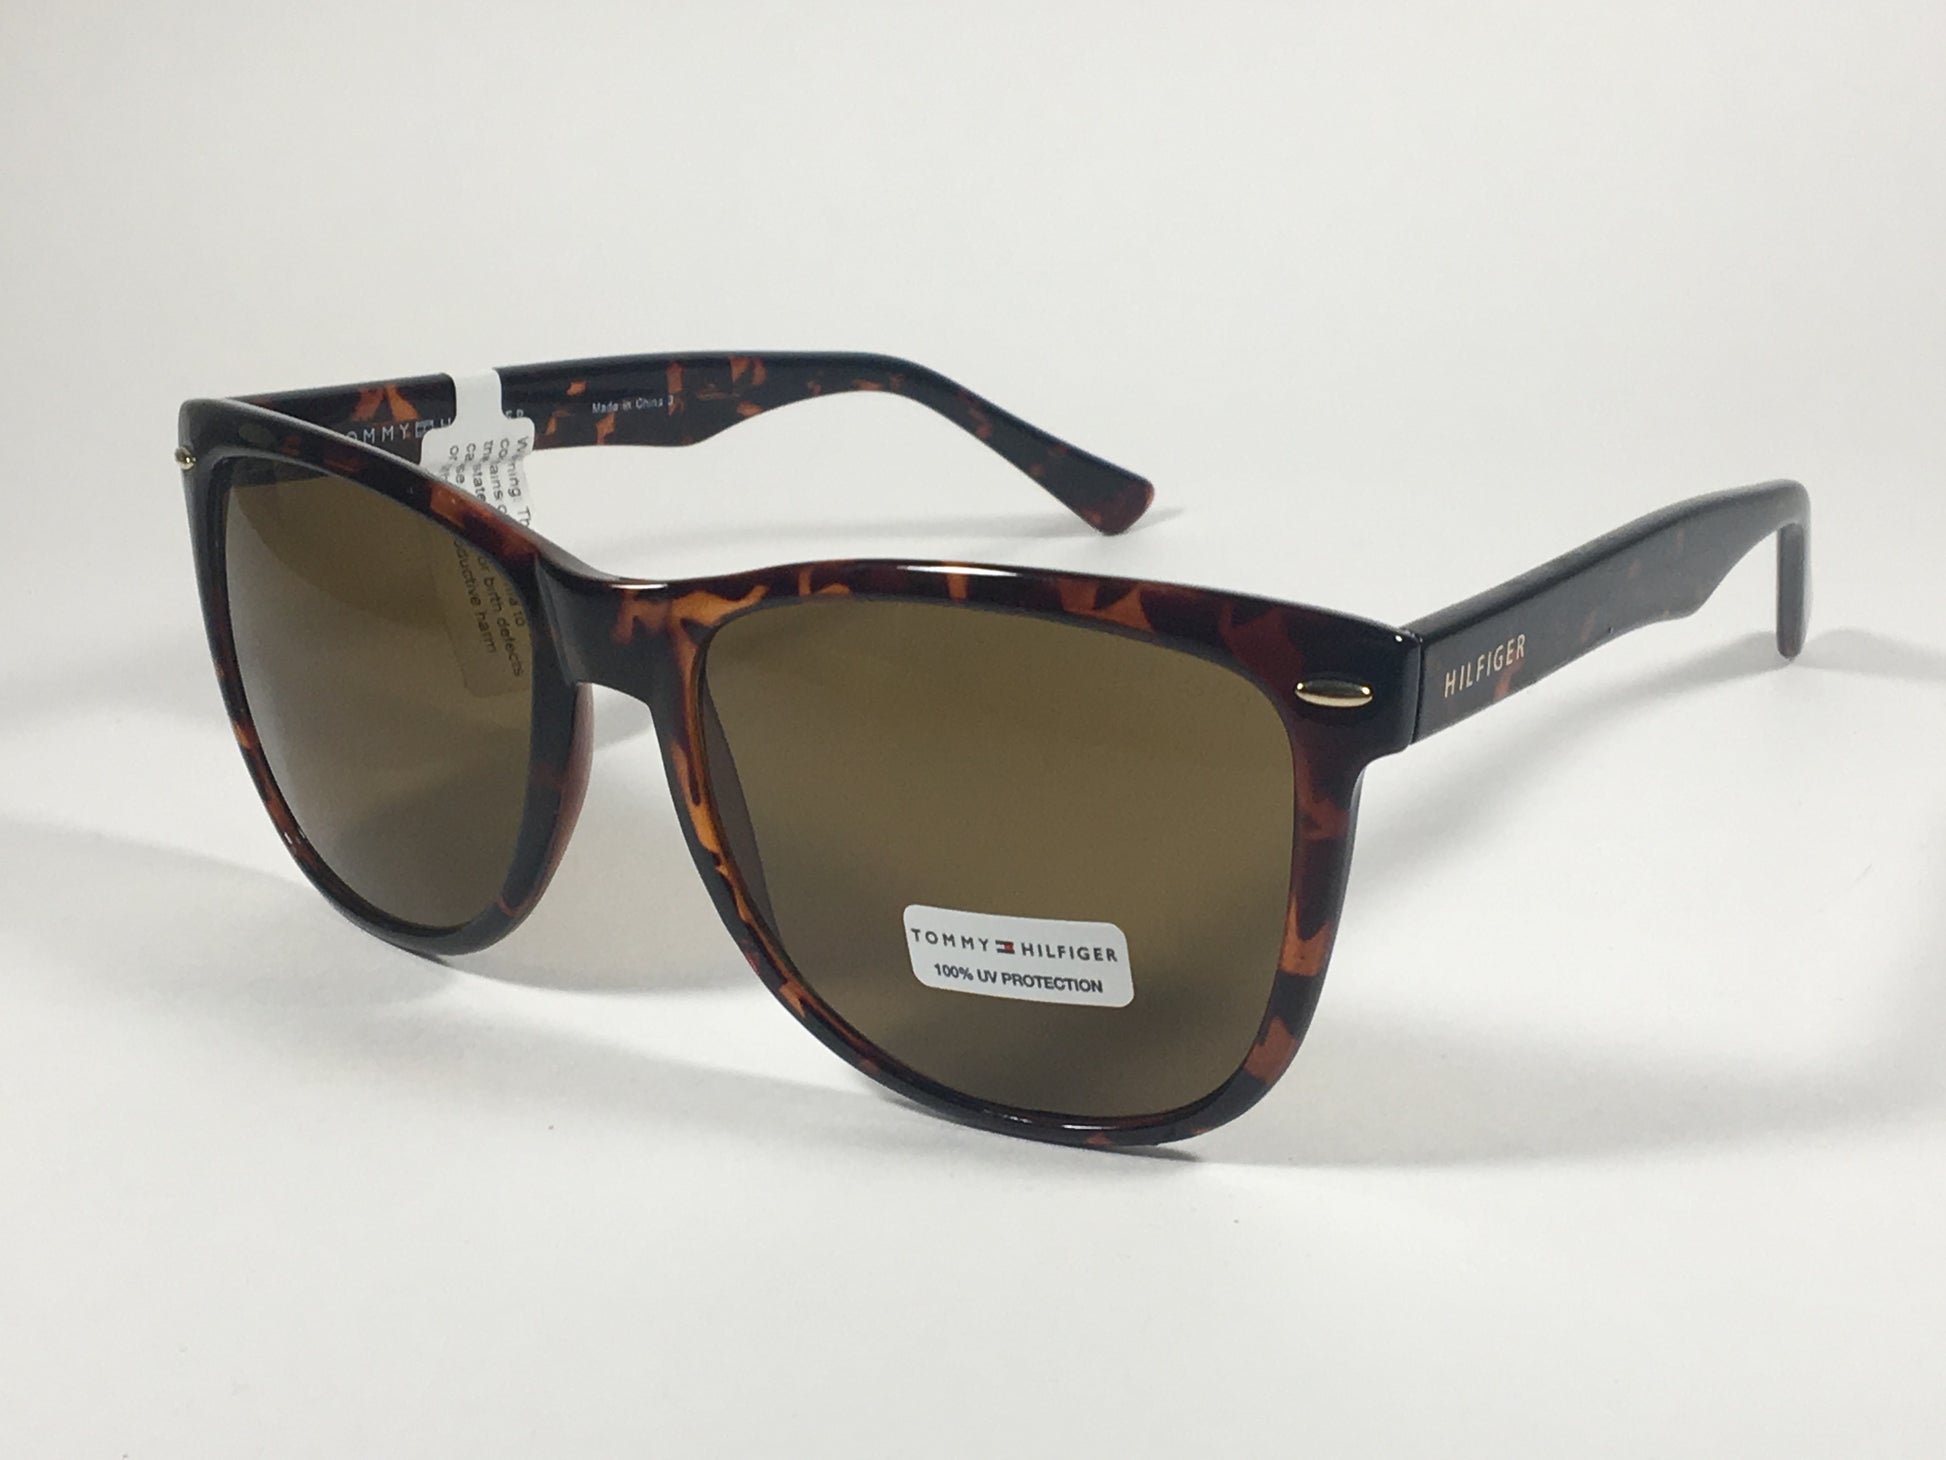 Tommy Hilfiger Conrad Rectangular Sunglasses Brown Tortoise Frame Brown Lens CONRAD MP OM130 BROWN TORT - Sunglasses